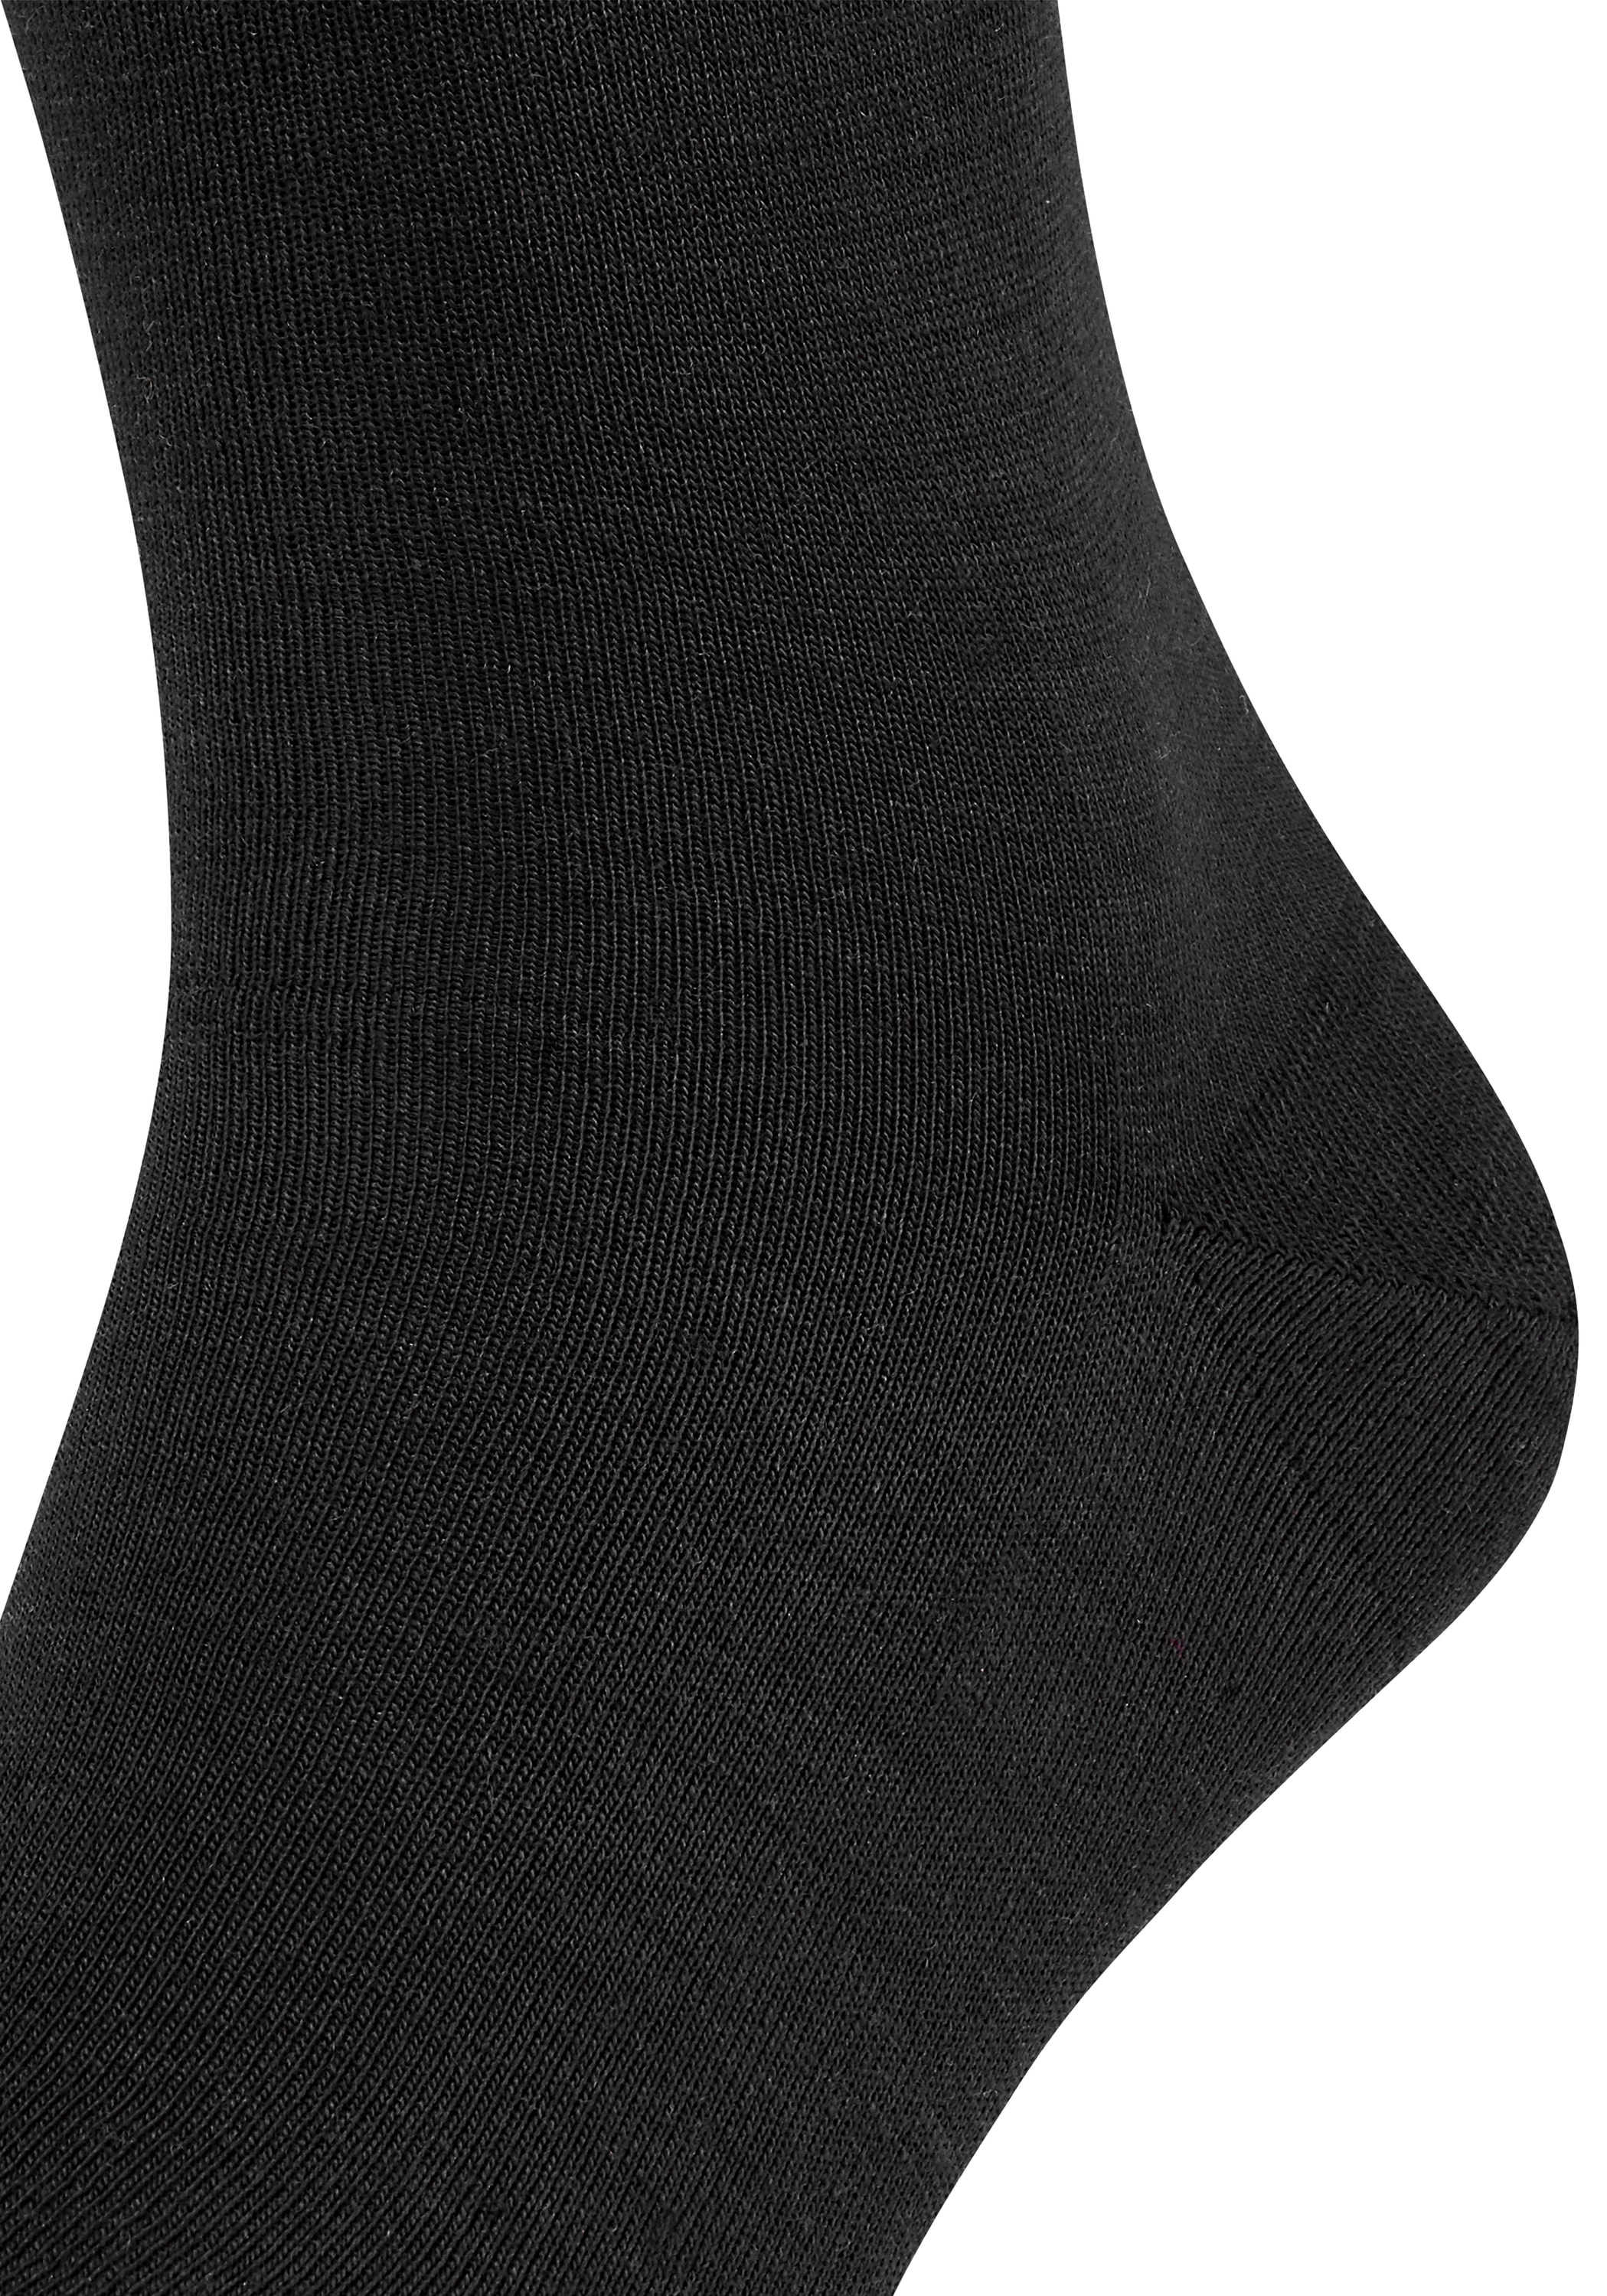 FALKE Socken »Sensitive Berlin«, (Packung, 2 Paar), mit sensitve Bündchen ohne Gummi